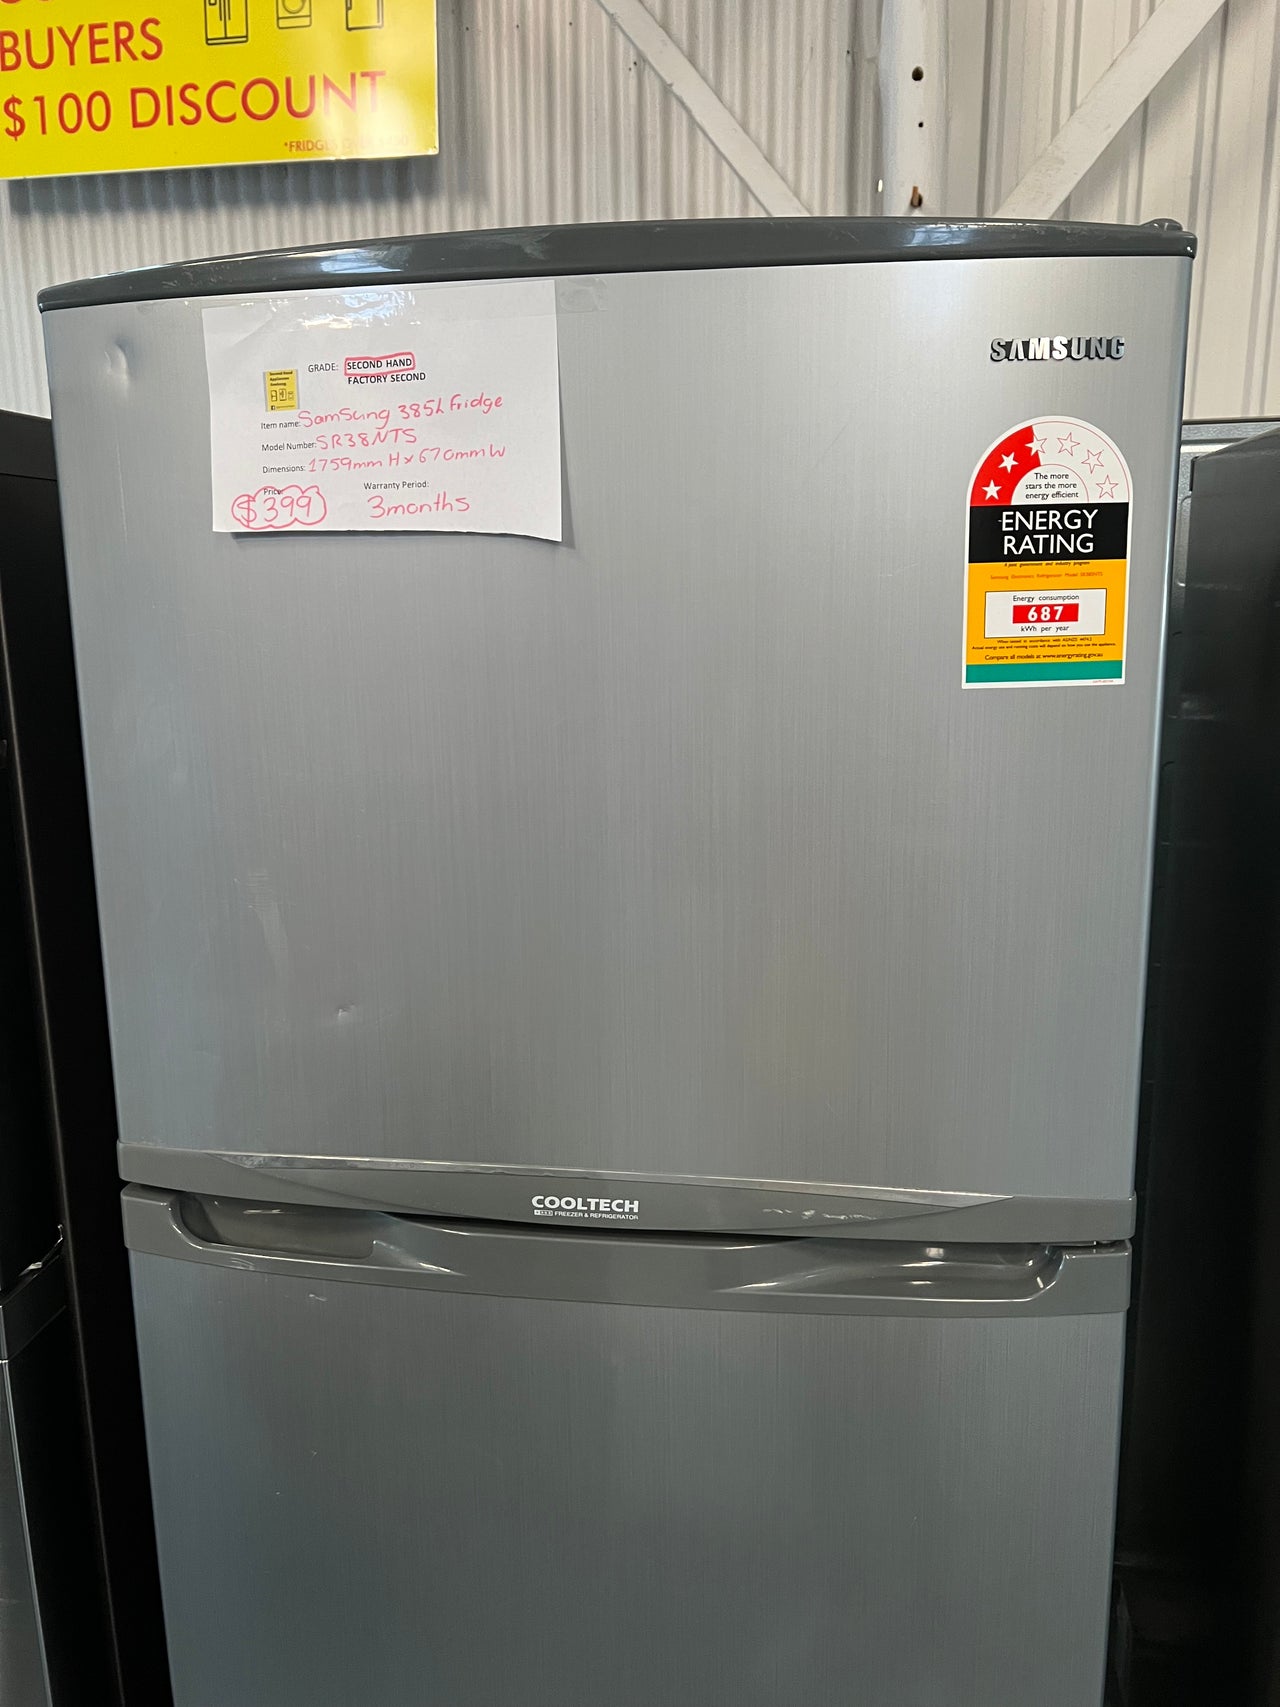 Second hand 385L Samsung Top Mounted Refrigerator SR385NTS - Second Hand Appliances Geebung